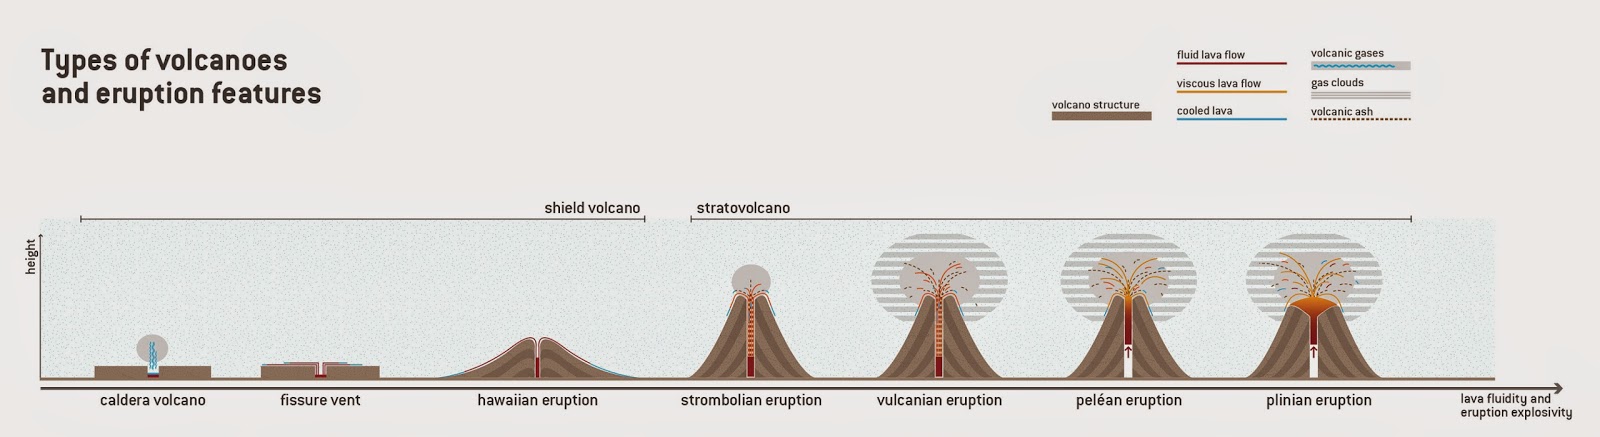 Types of volcanoes + eruption features.